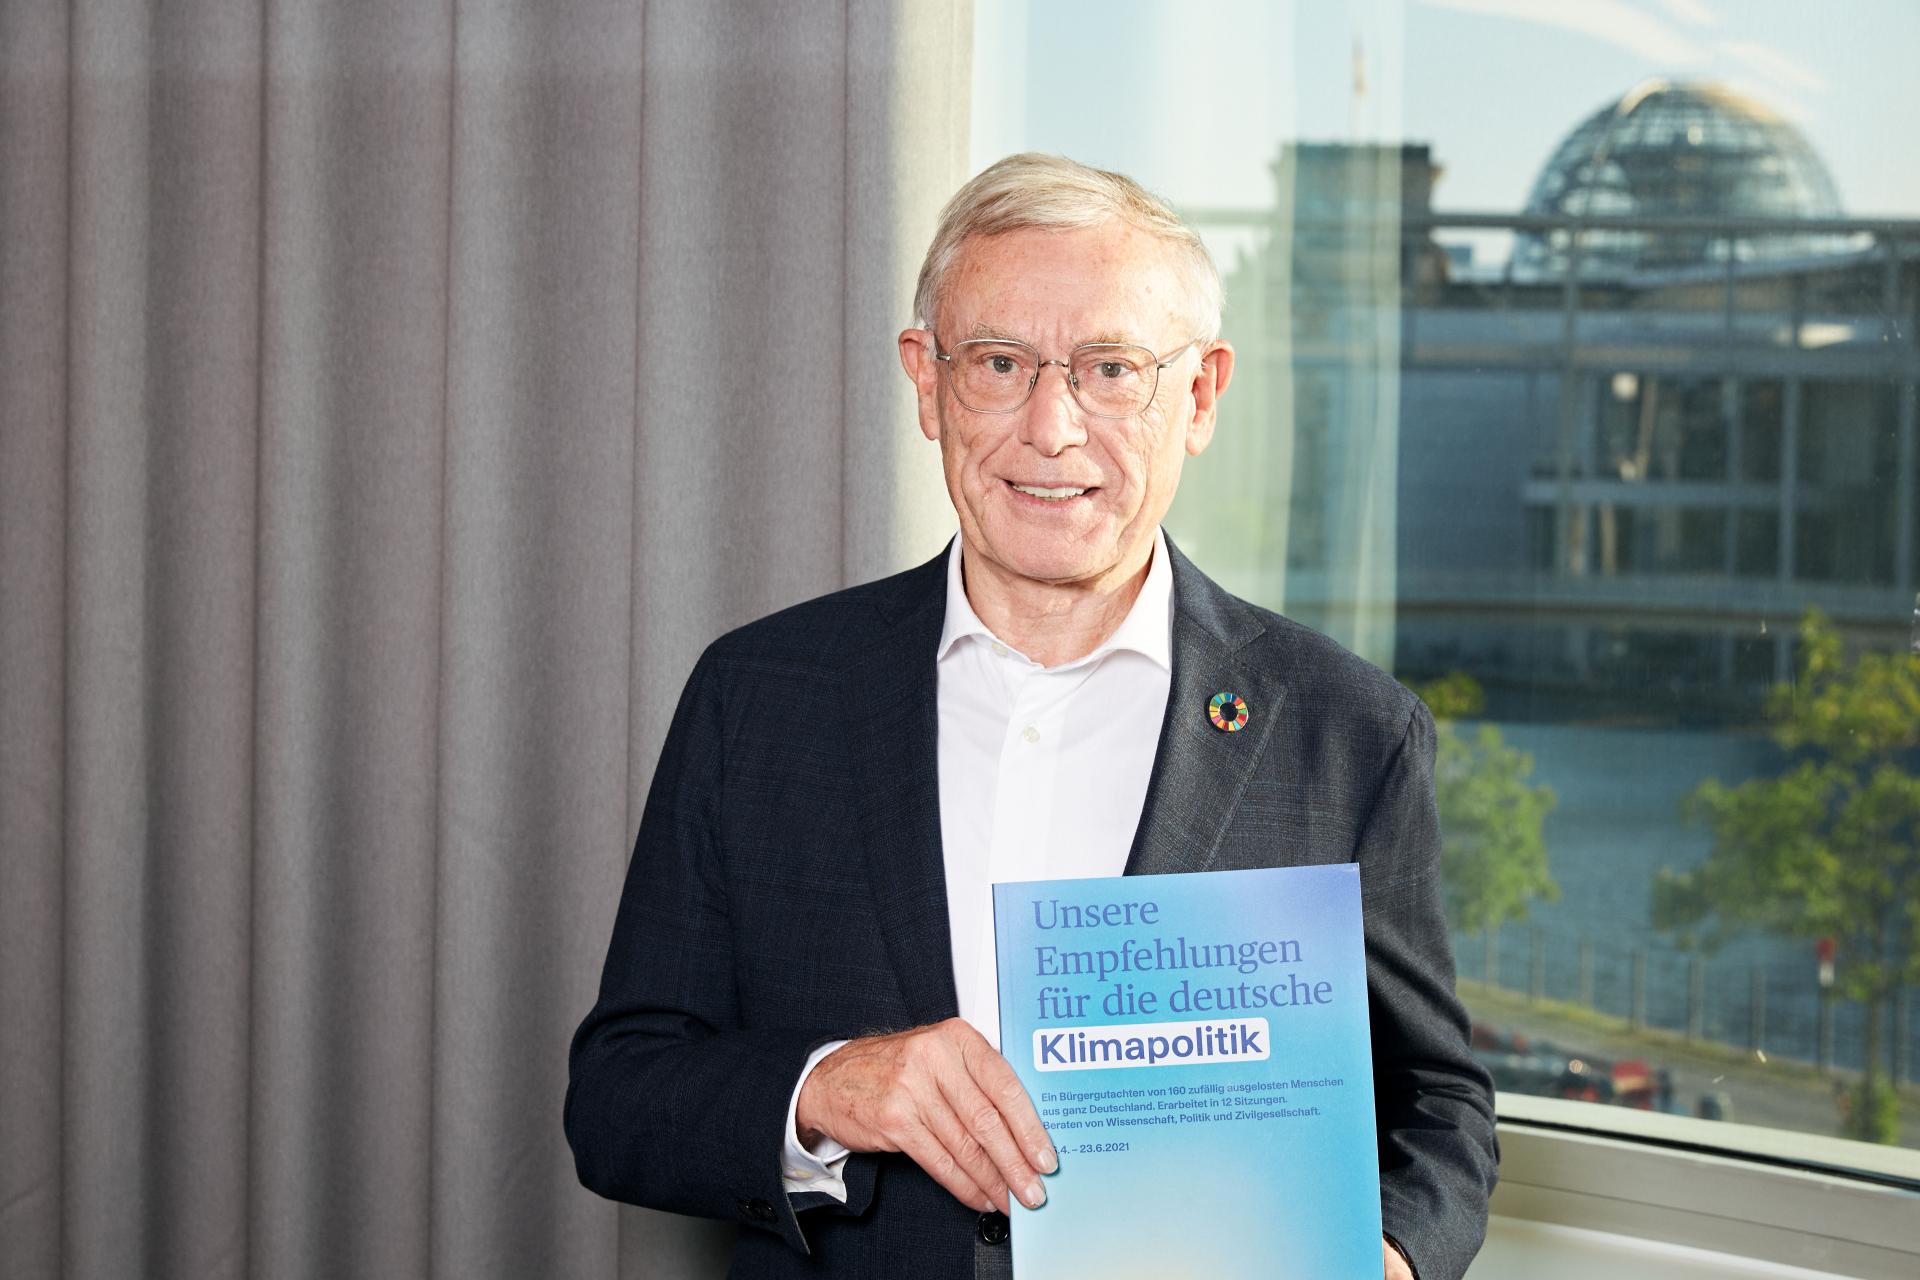 Patron Horst Köhler holding the final report publication